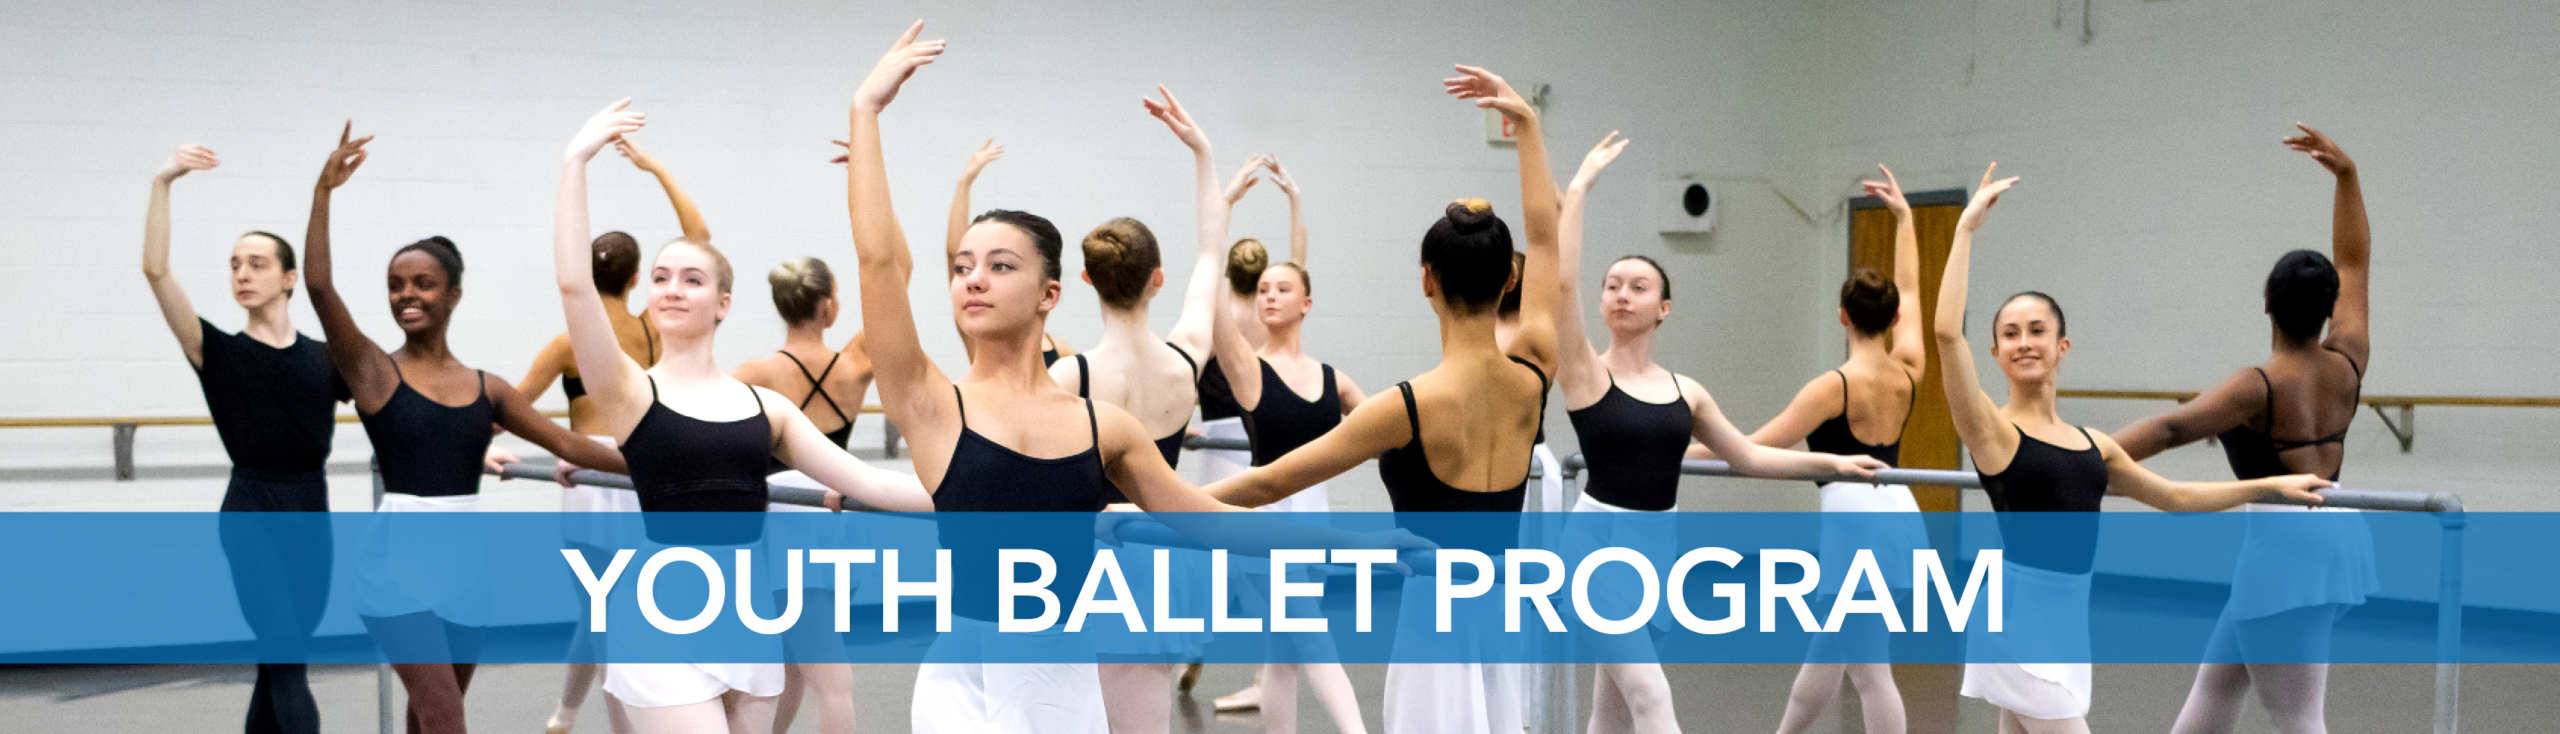 Grand Rapids Ballet, Youth Ballet Program